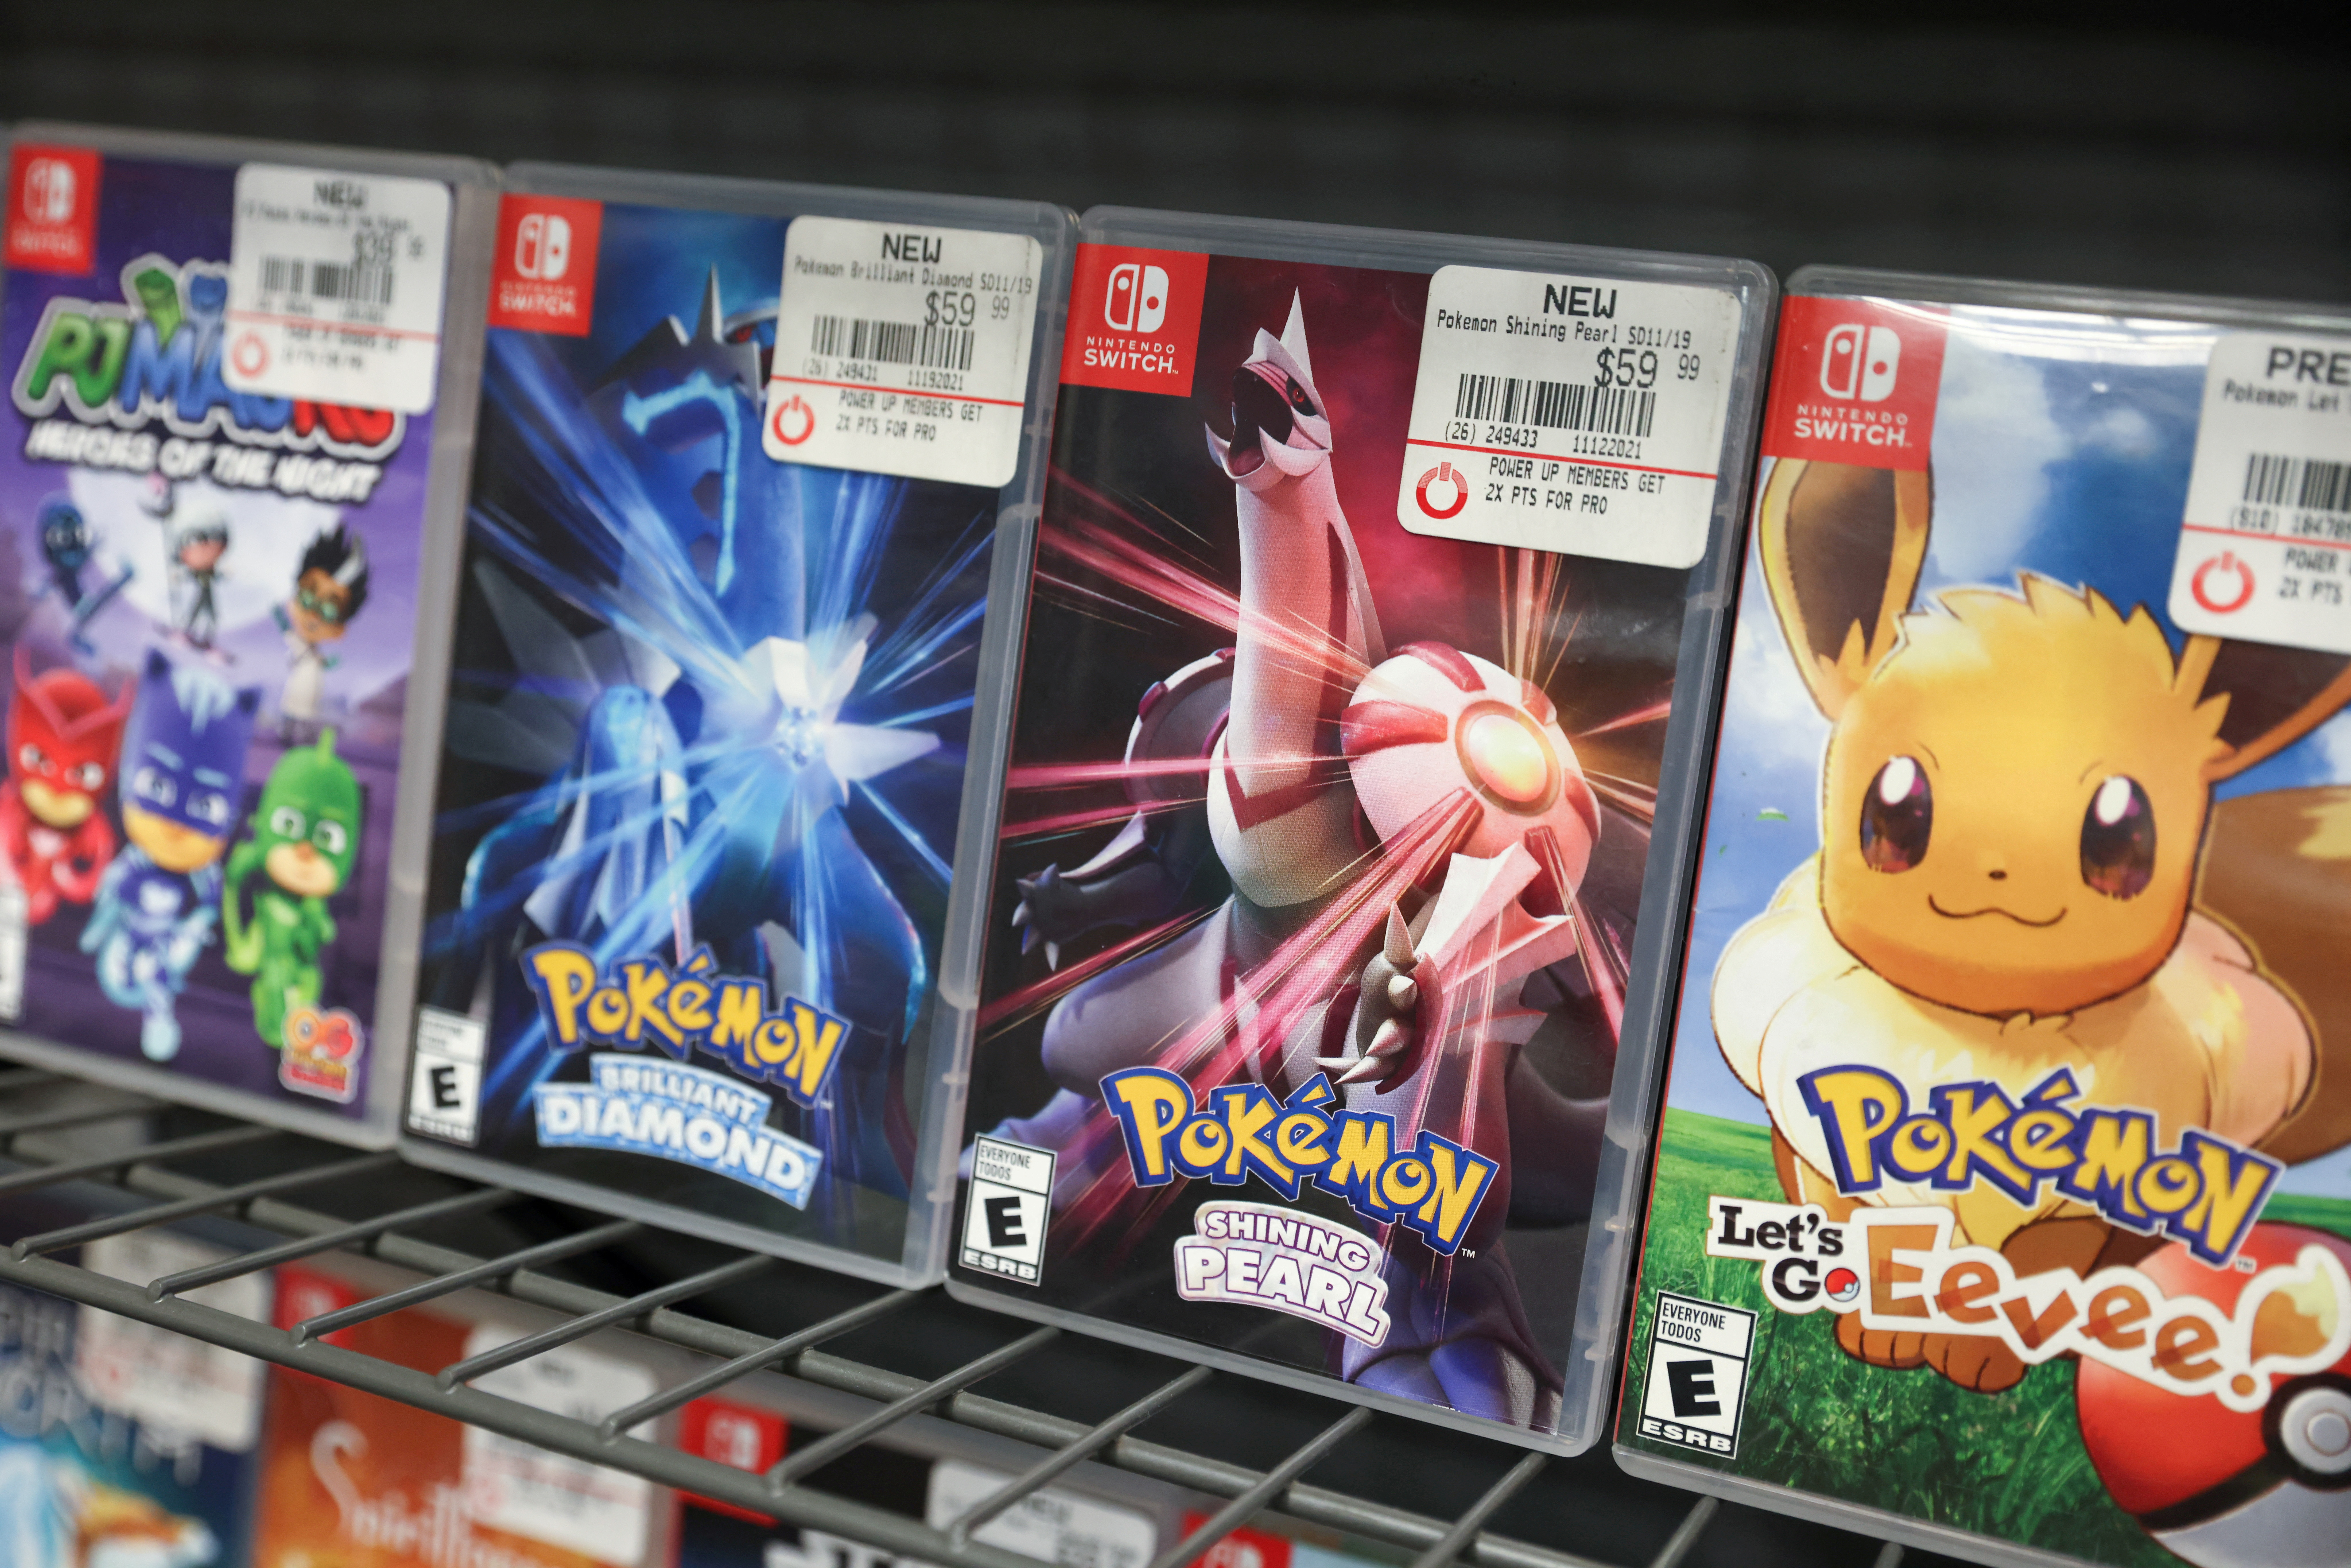 Pokemon games are seen on sale in a GameStop in Manhattan, New York